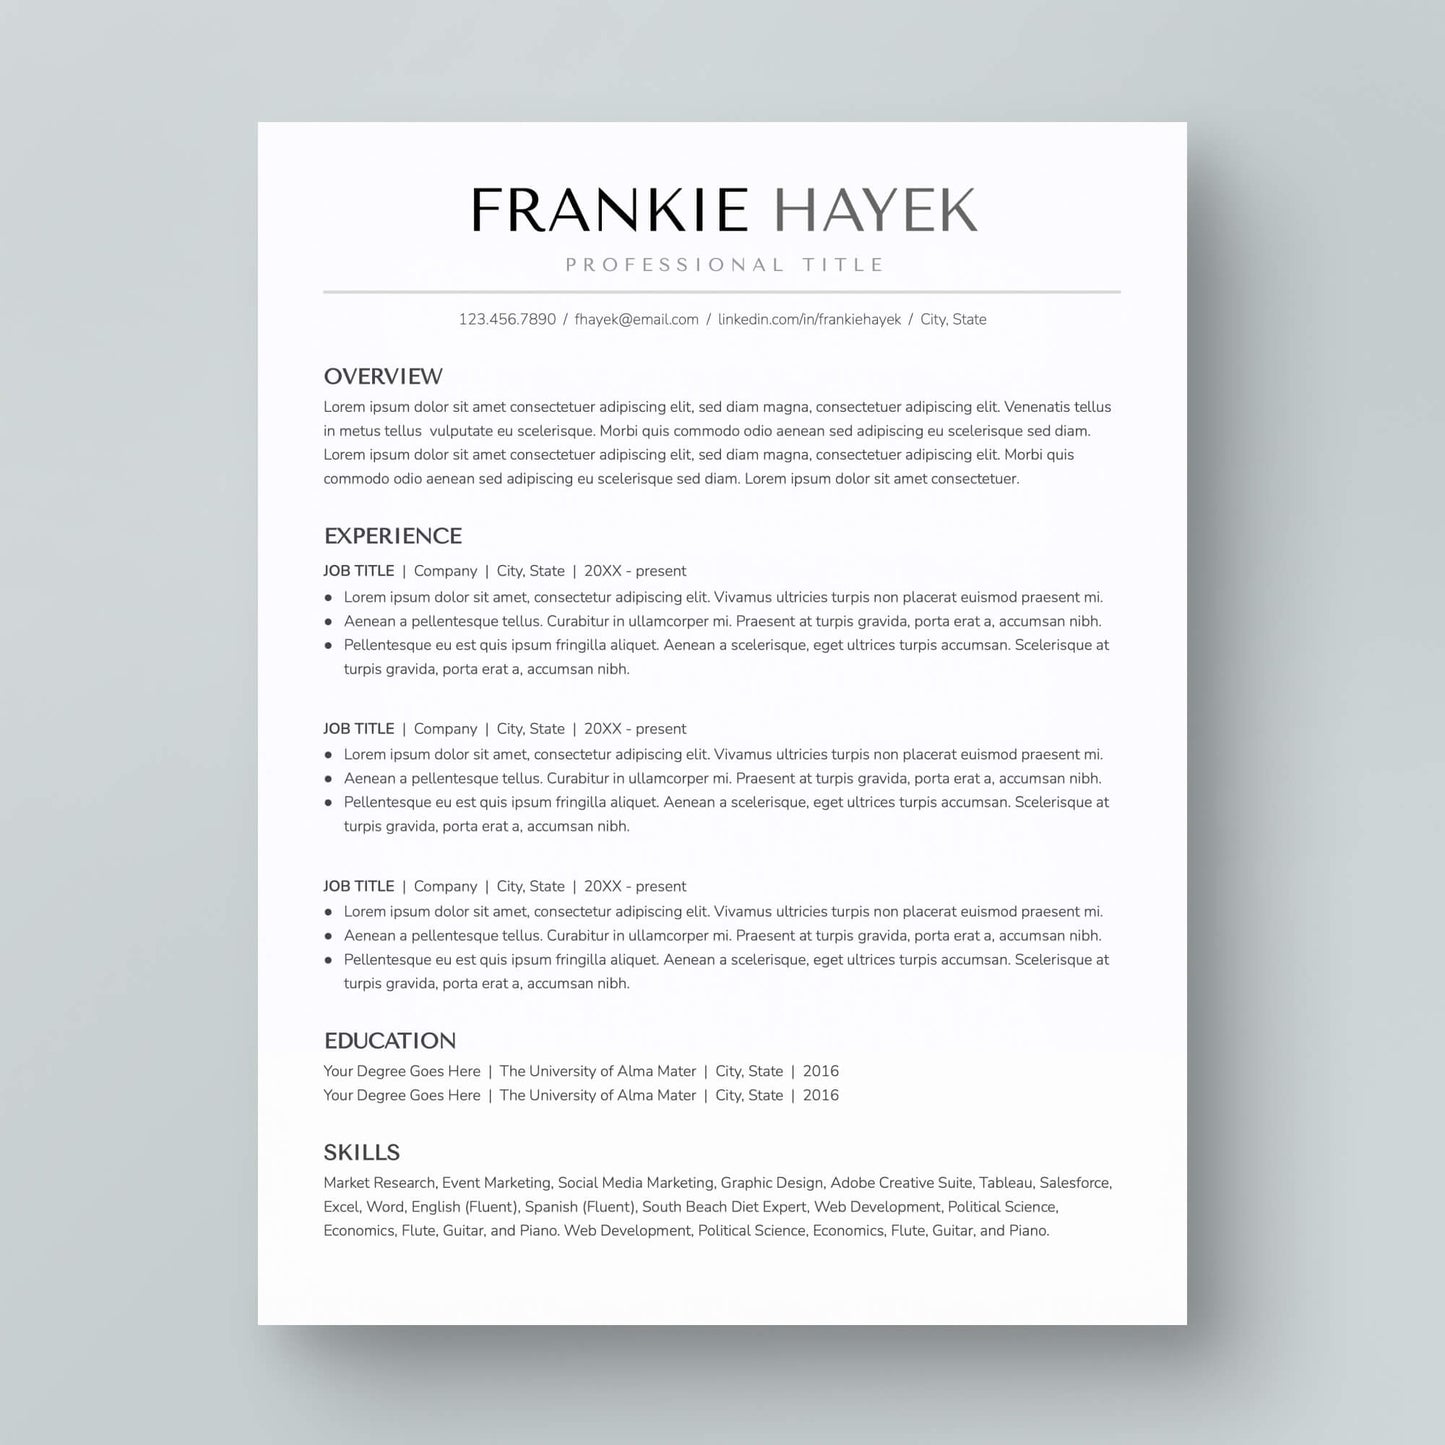 ATS-friendly Resume Template: Frankie Hayek - MioDocs